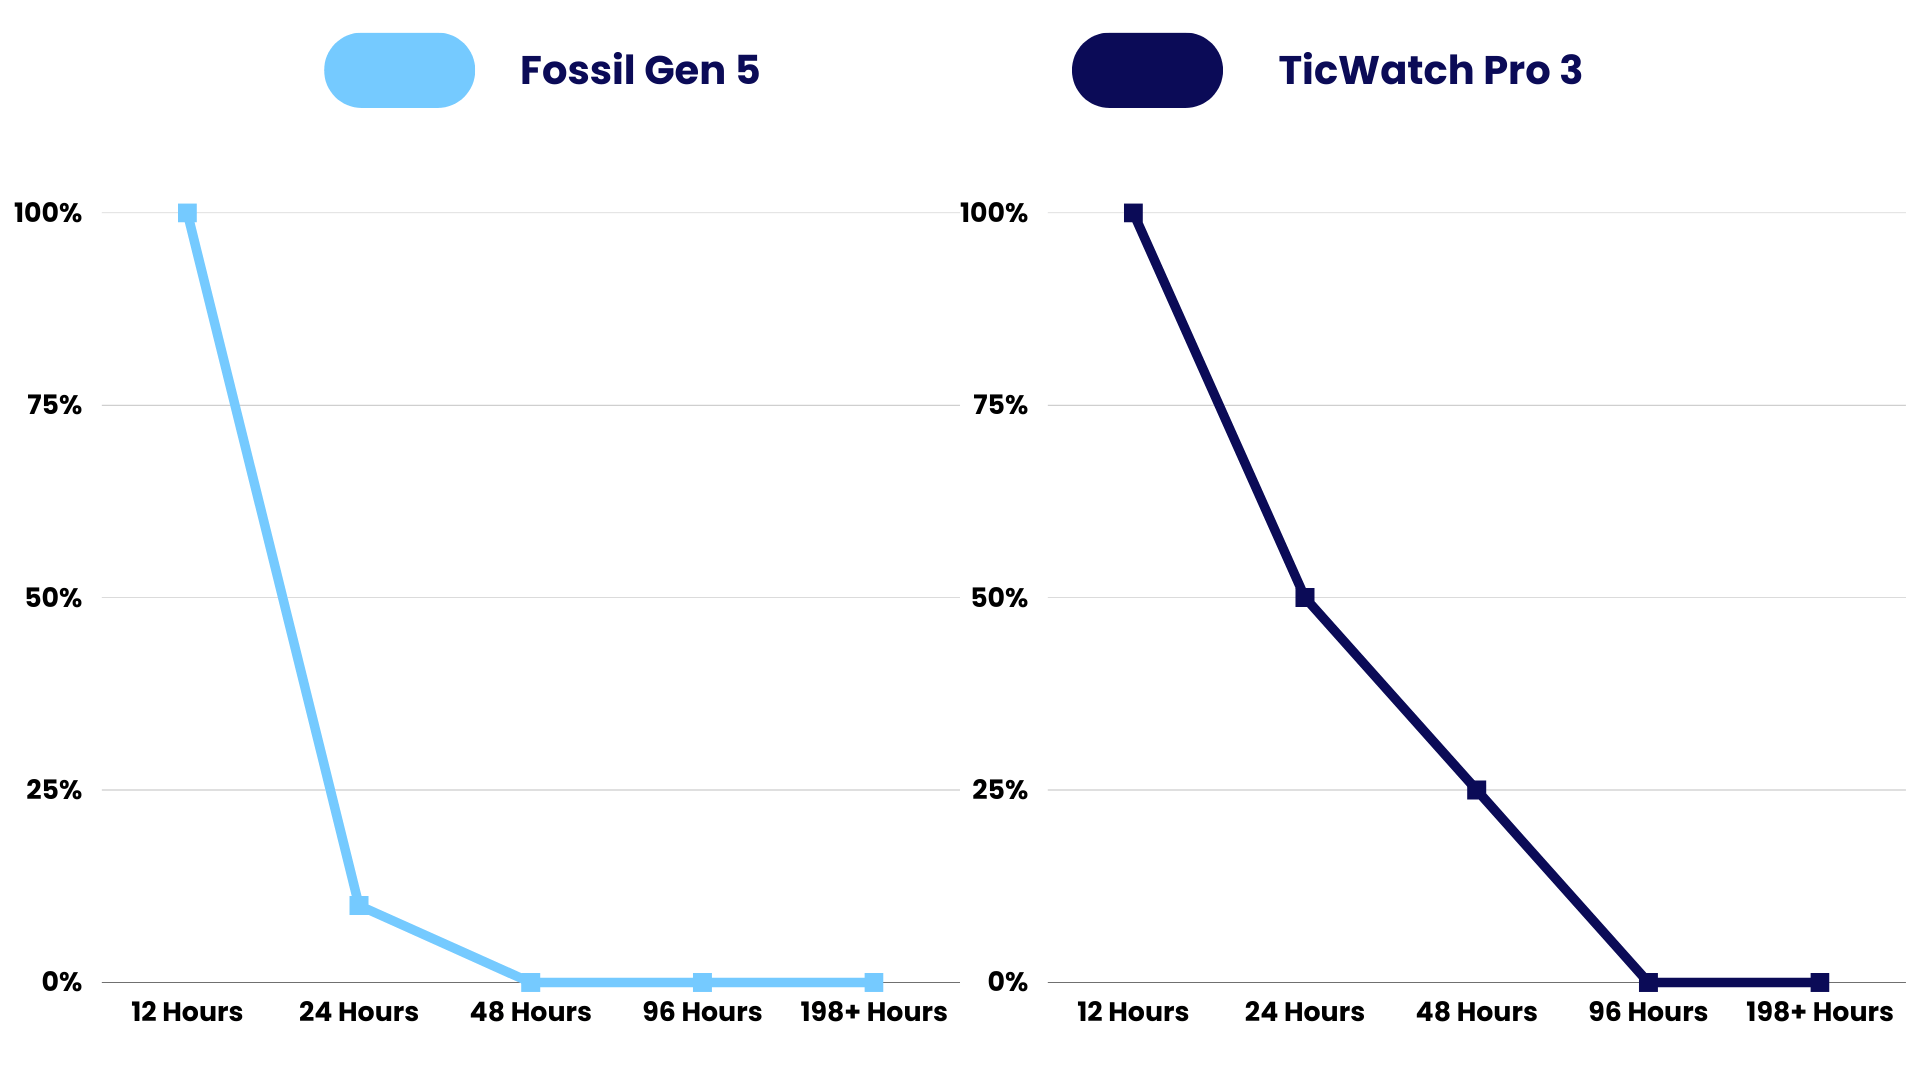 Lifespan Comparison of Fossil Gen 5 vs TicWatch Pro 3